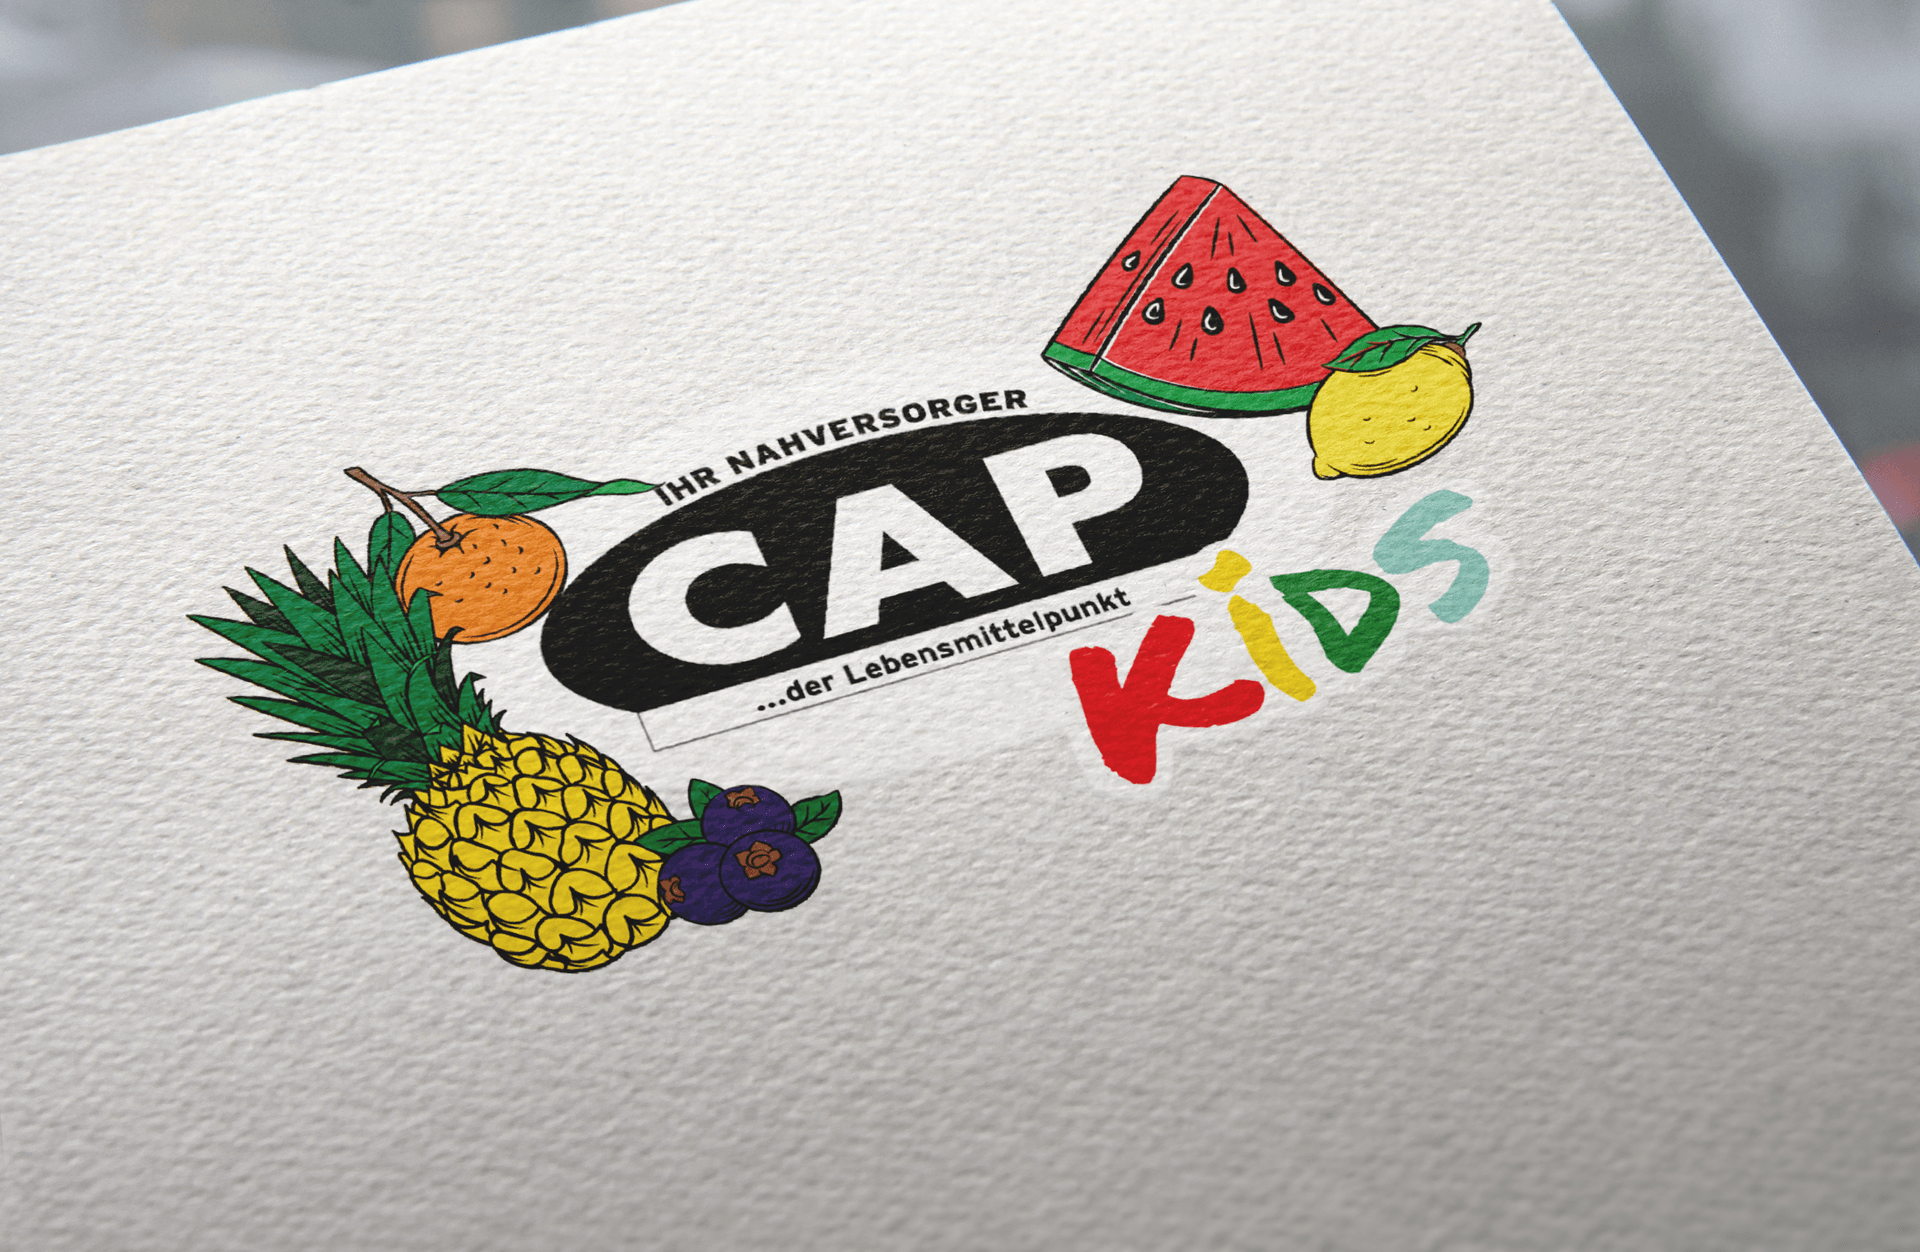 Agentur_Koenigspunkt_Referenz_CAP_Logo_Kids.png
				